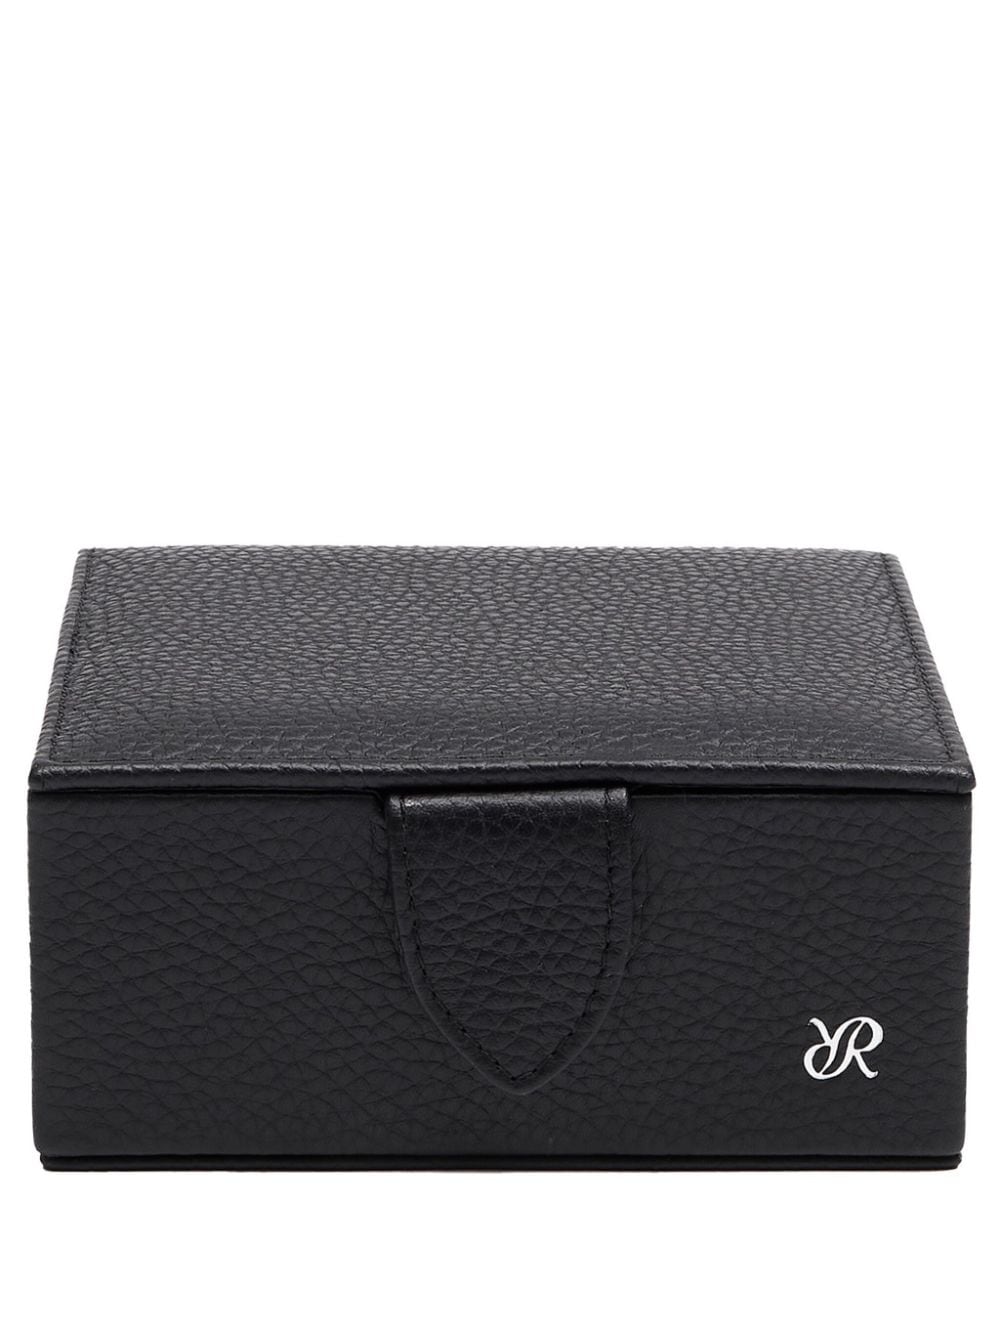 Rapport Tuxedo Collection jewellery box - Black von Rapport